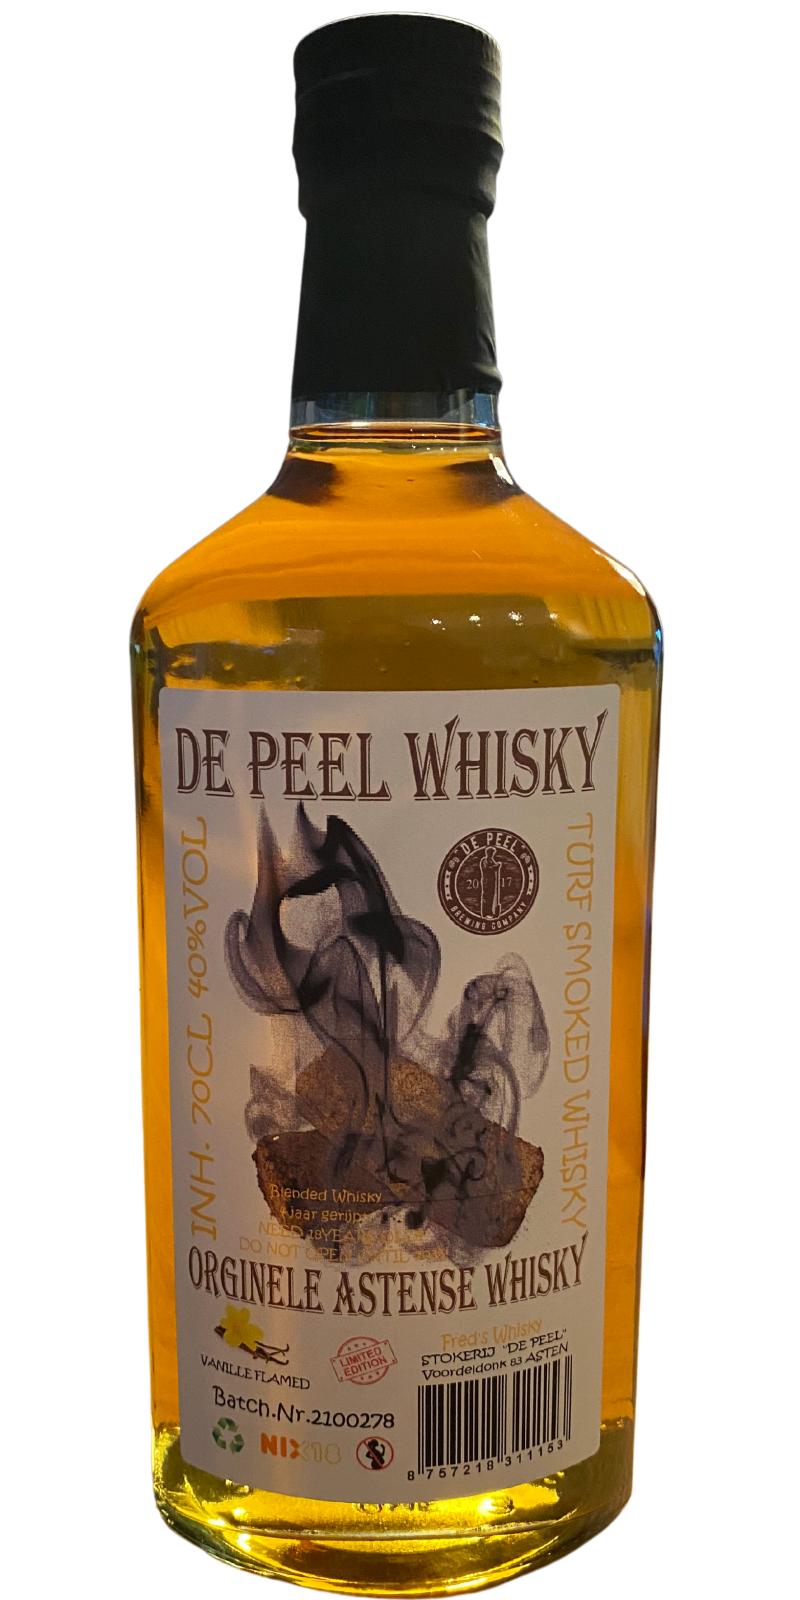 De Peel 4yo Originele Astense Whisky 40% 700ml